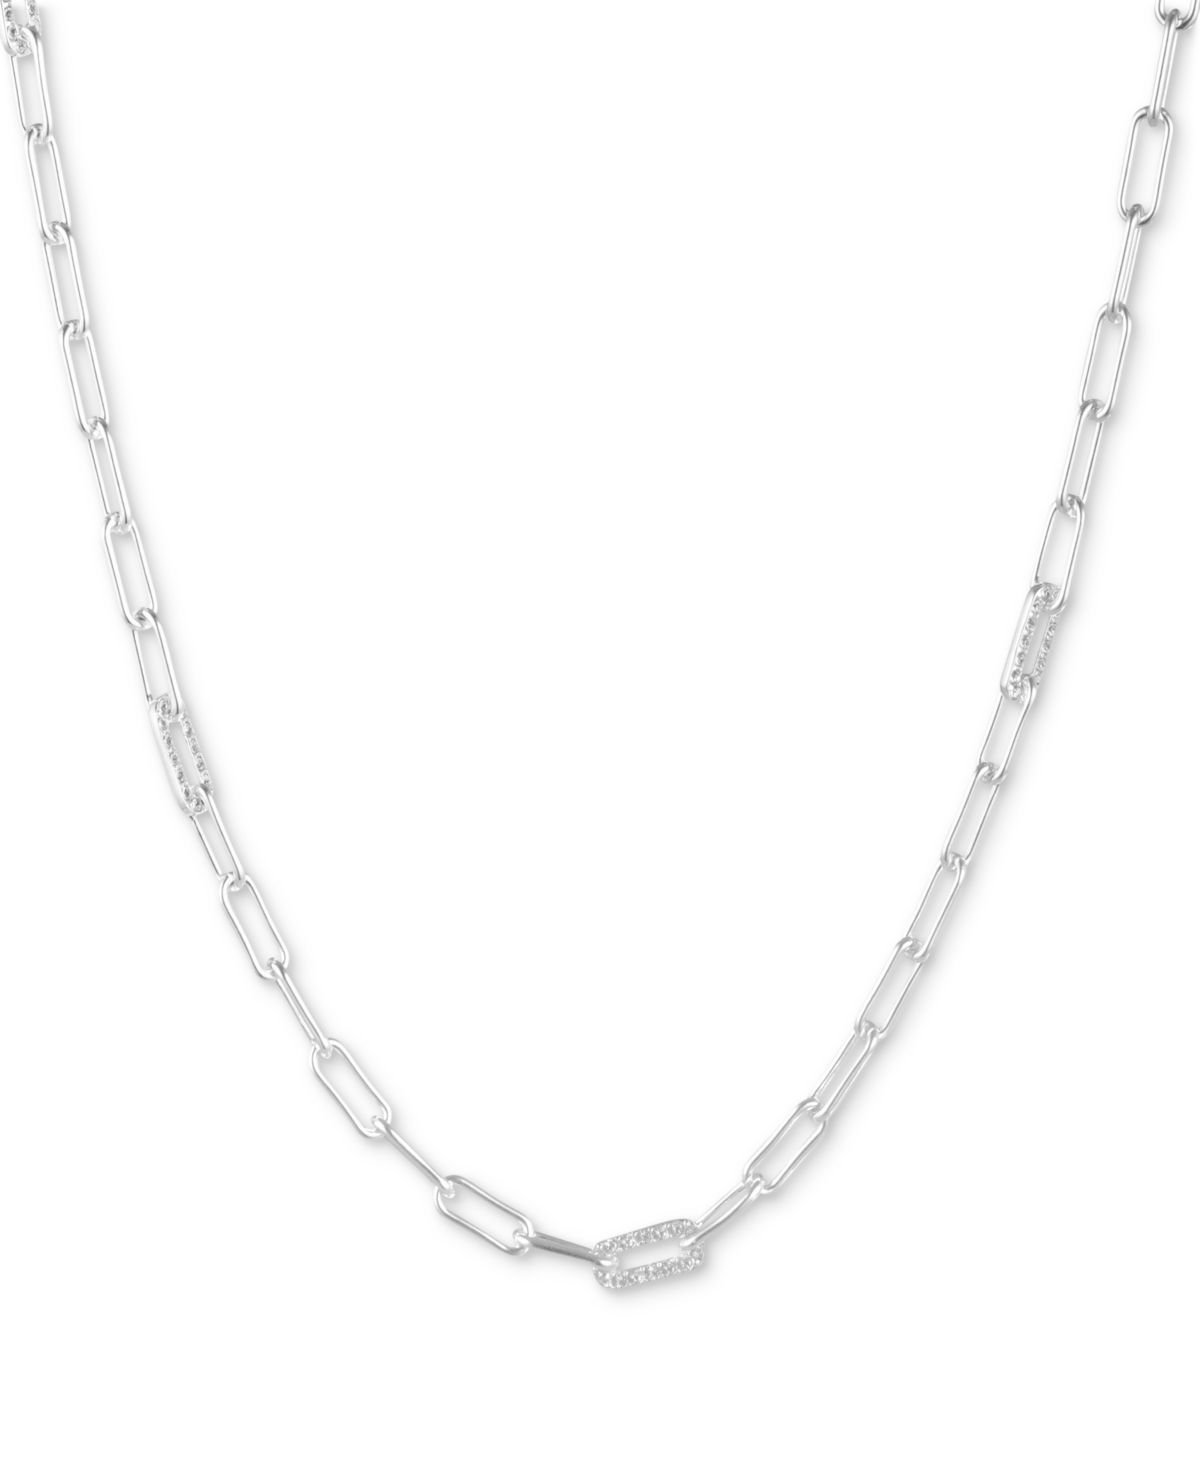 Lauren Ralph Lauren Crystal Pave Open Link Collar Necklace in Sterling Silver, 15" + 3" extender - Sterling Silver